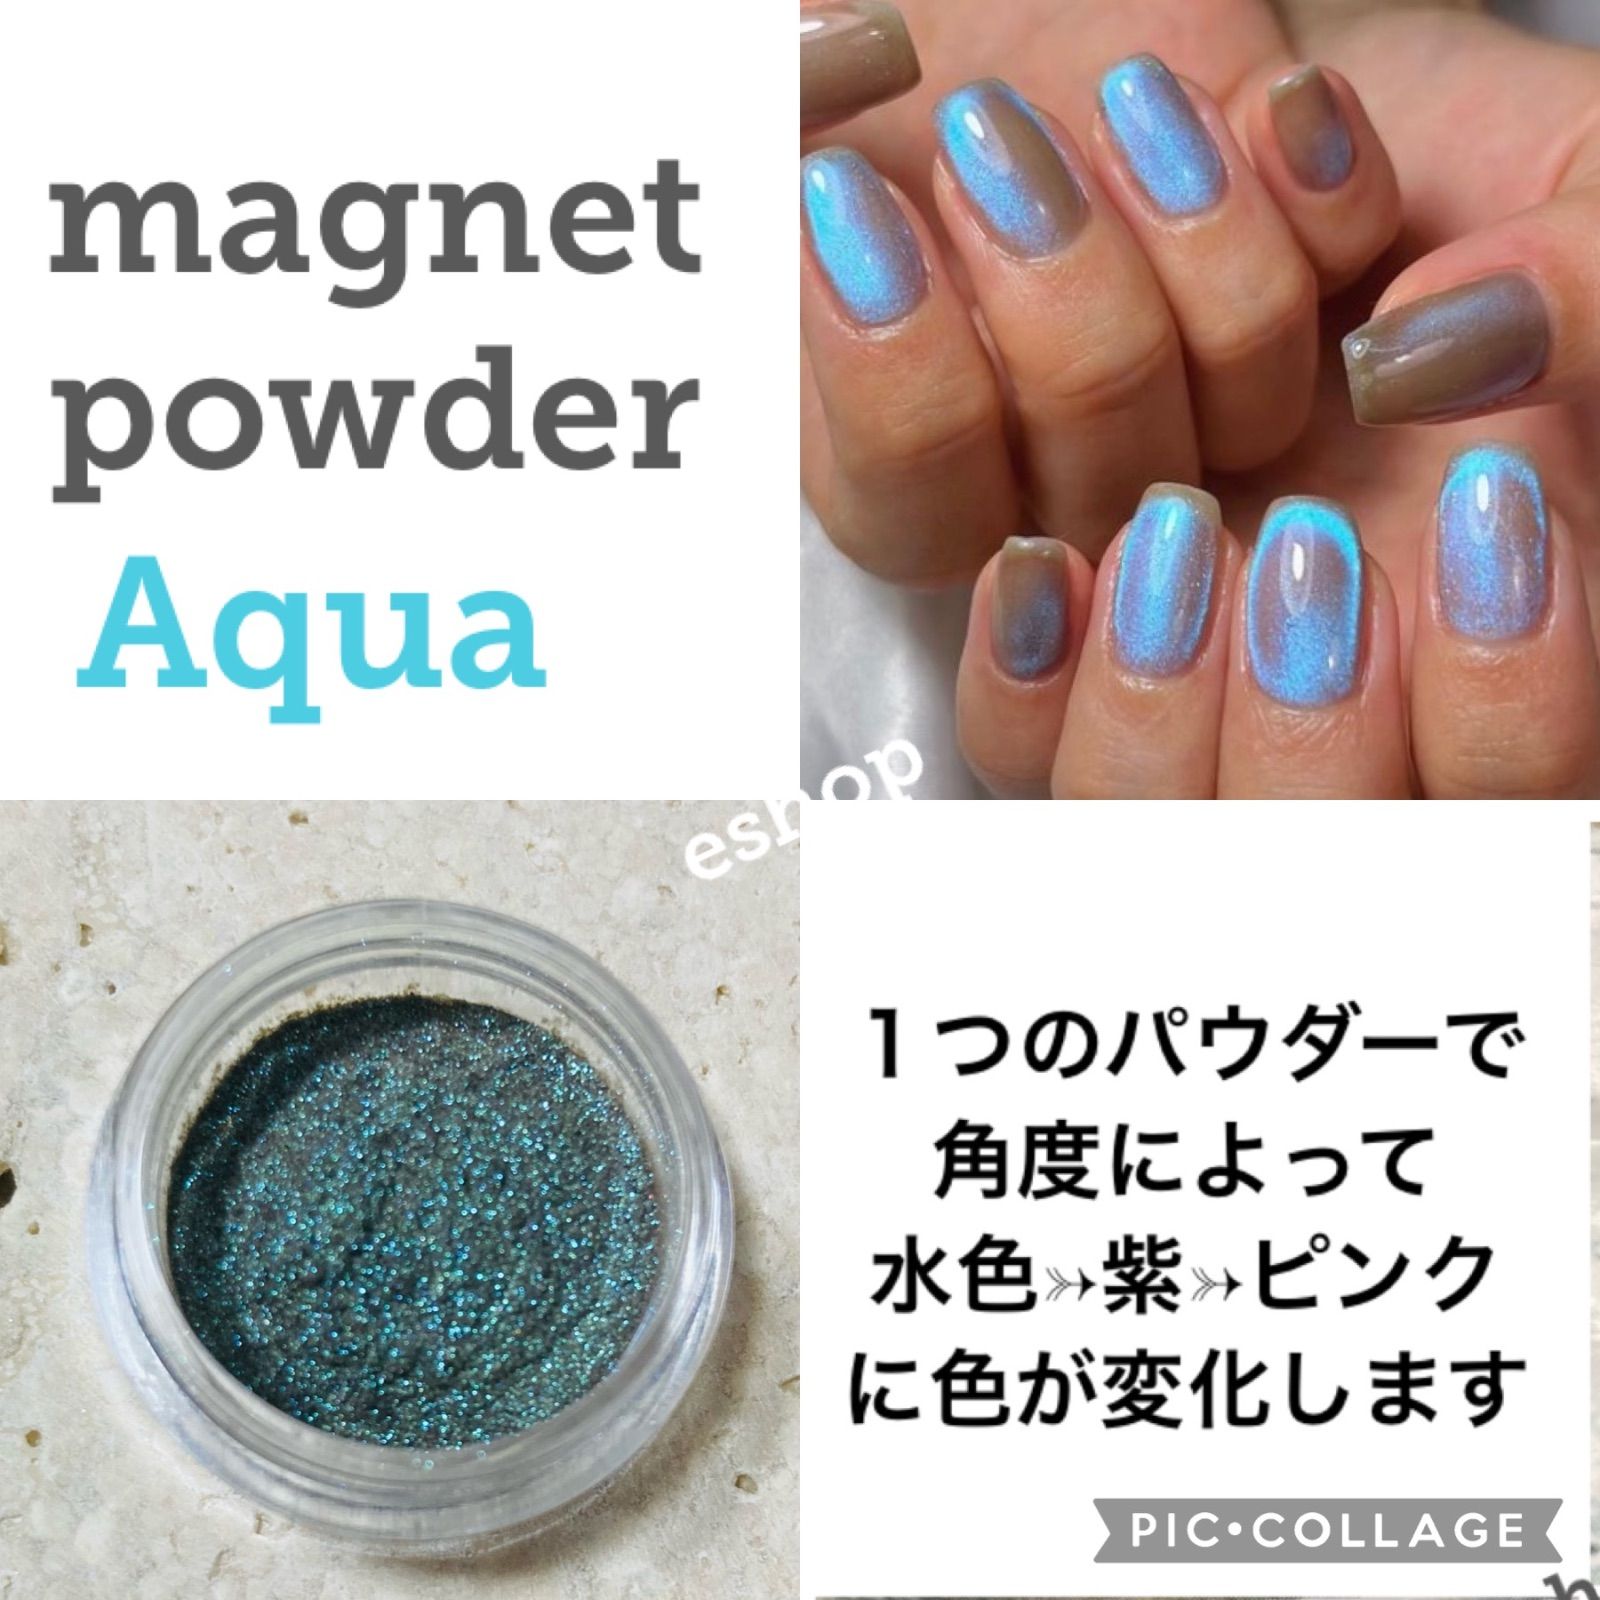 magnet powder